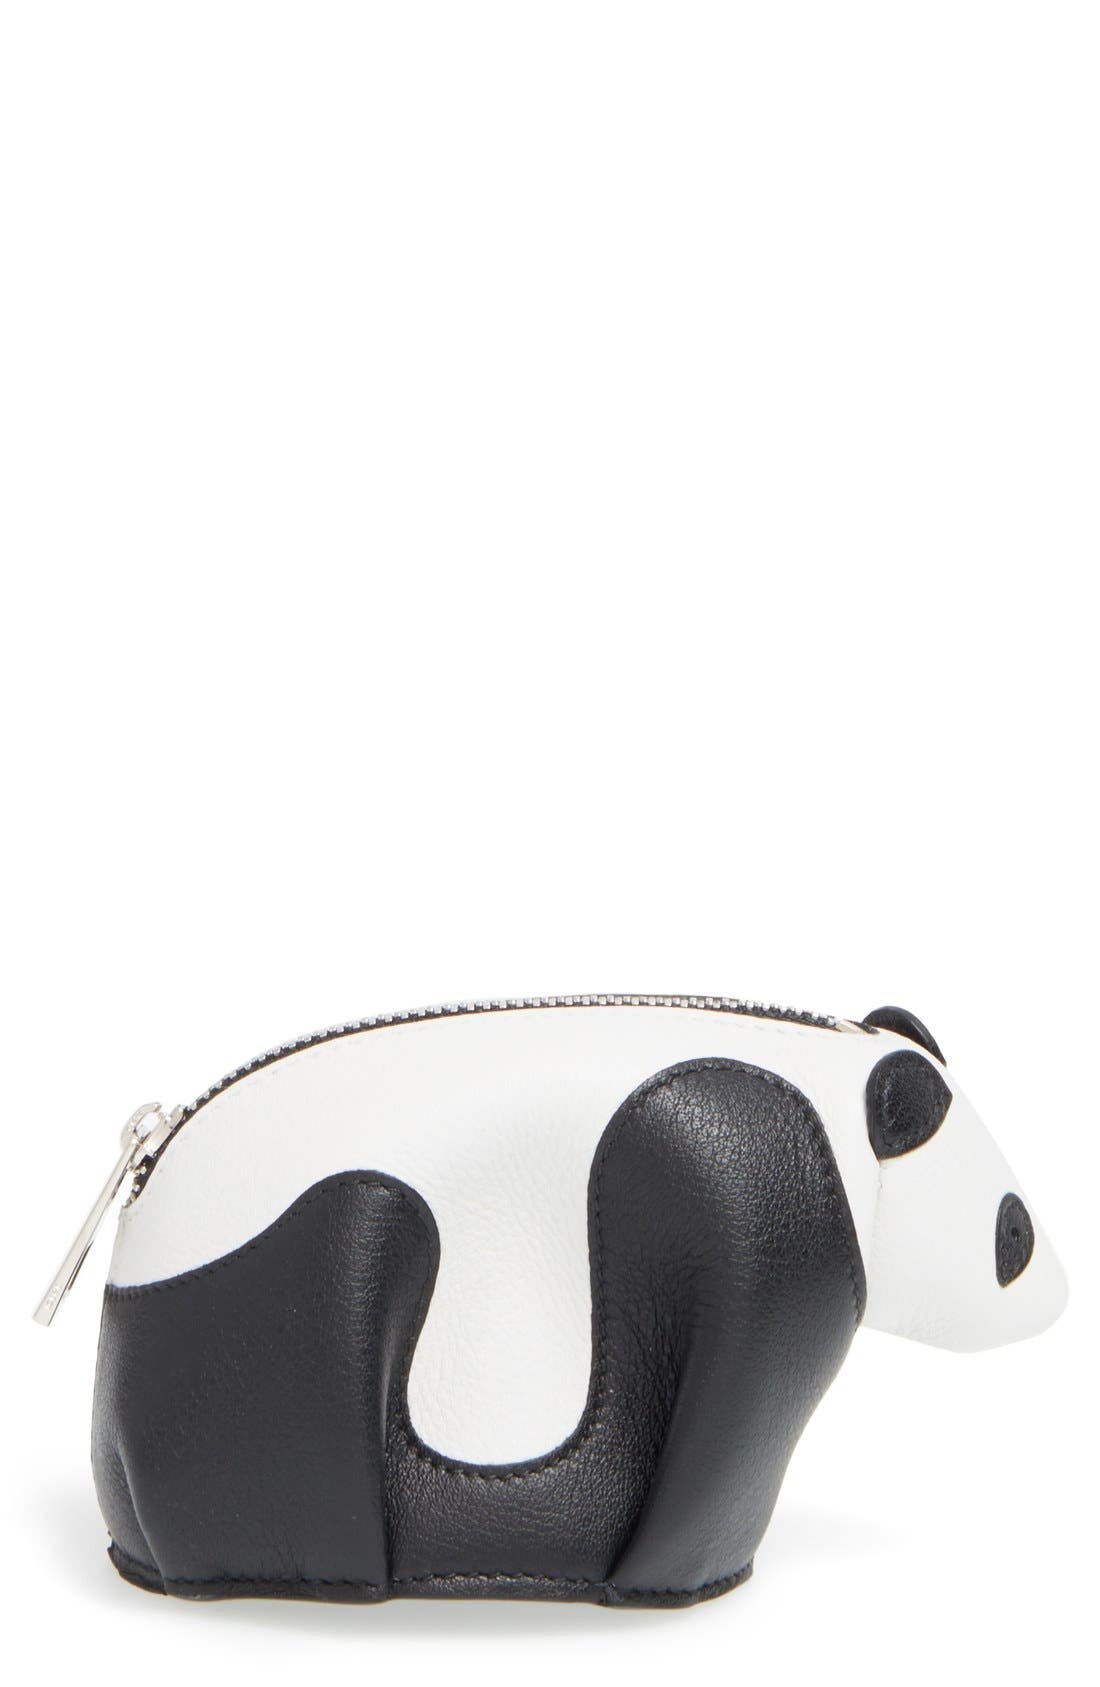 loewe panda coin purse